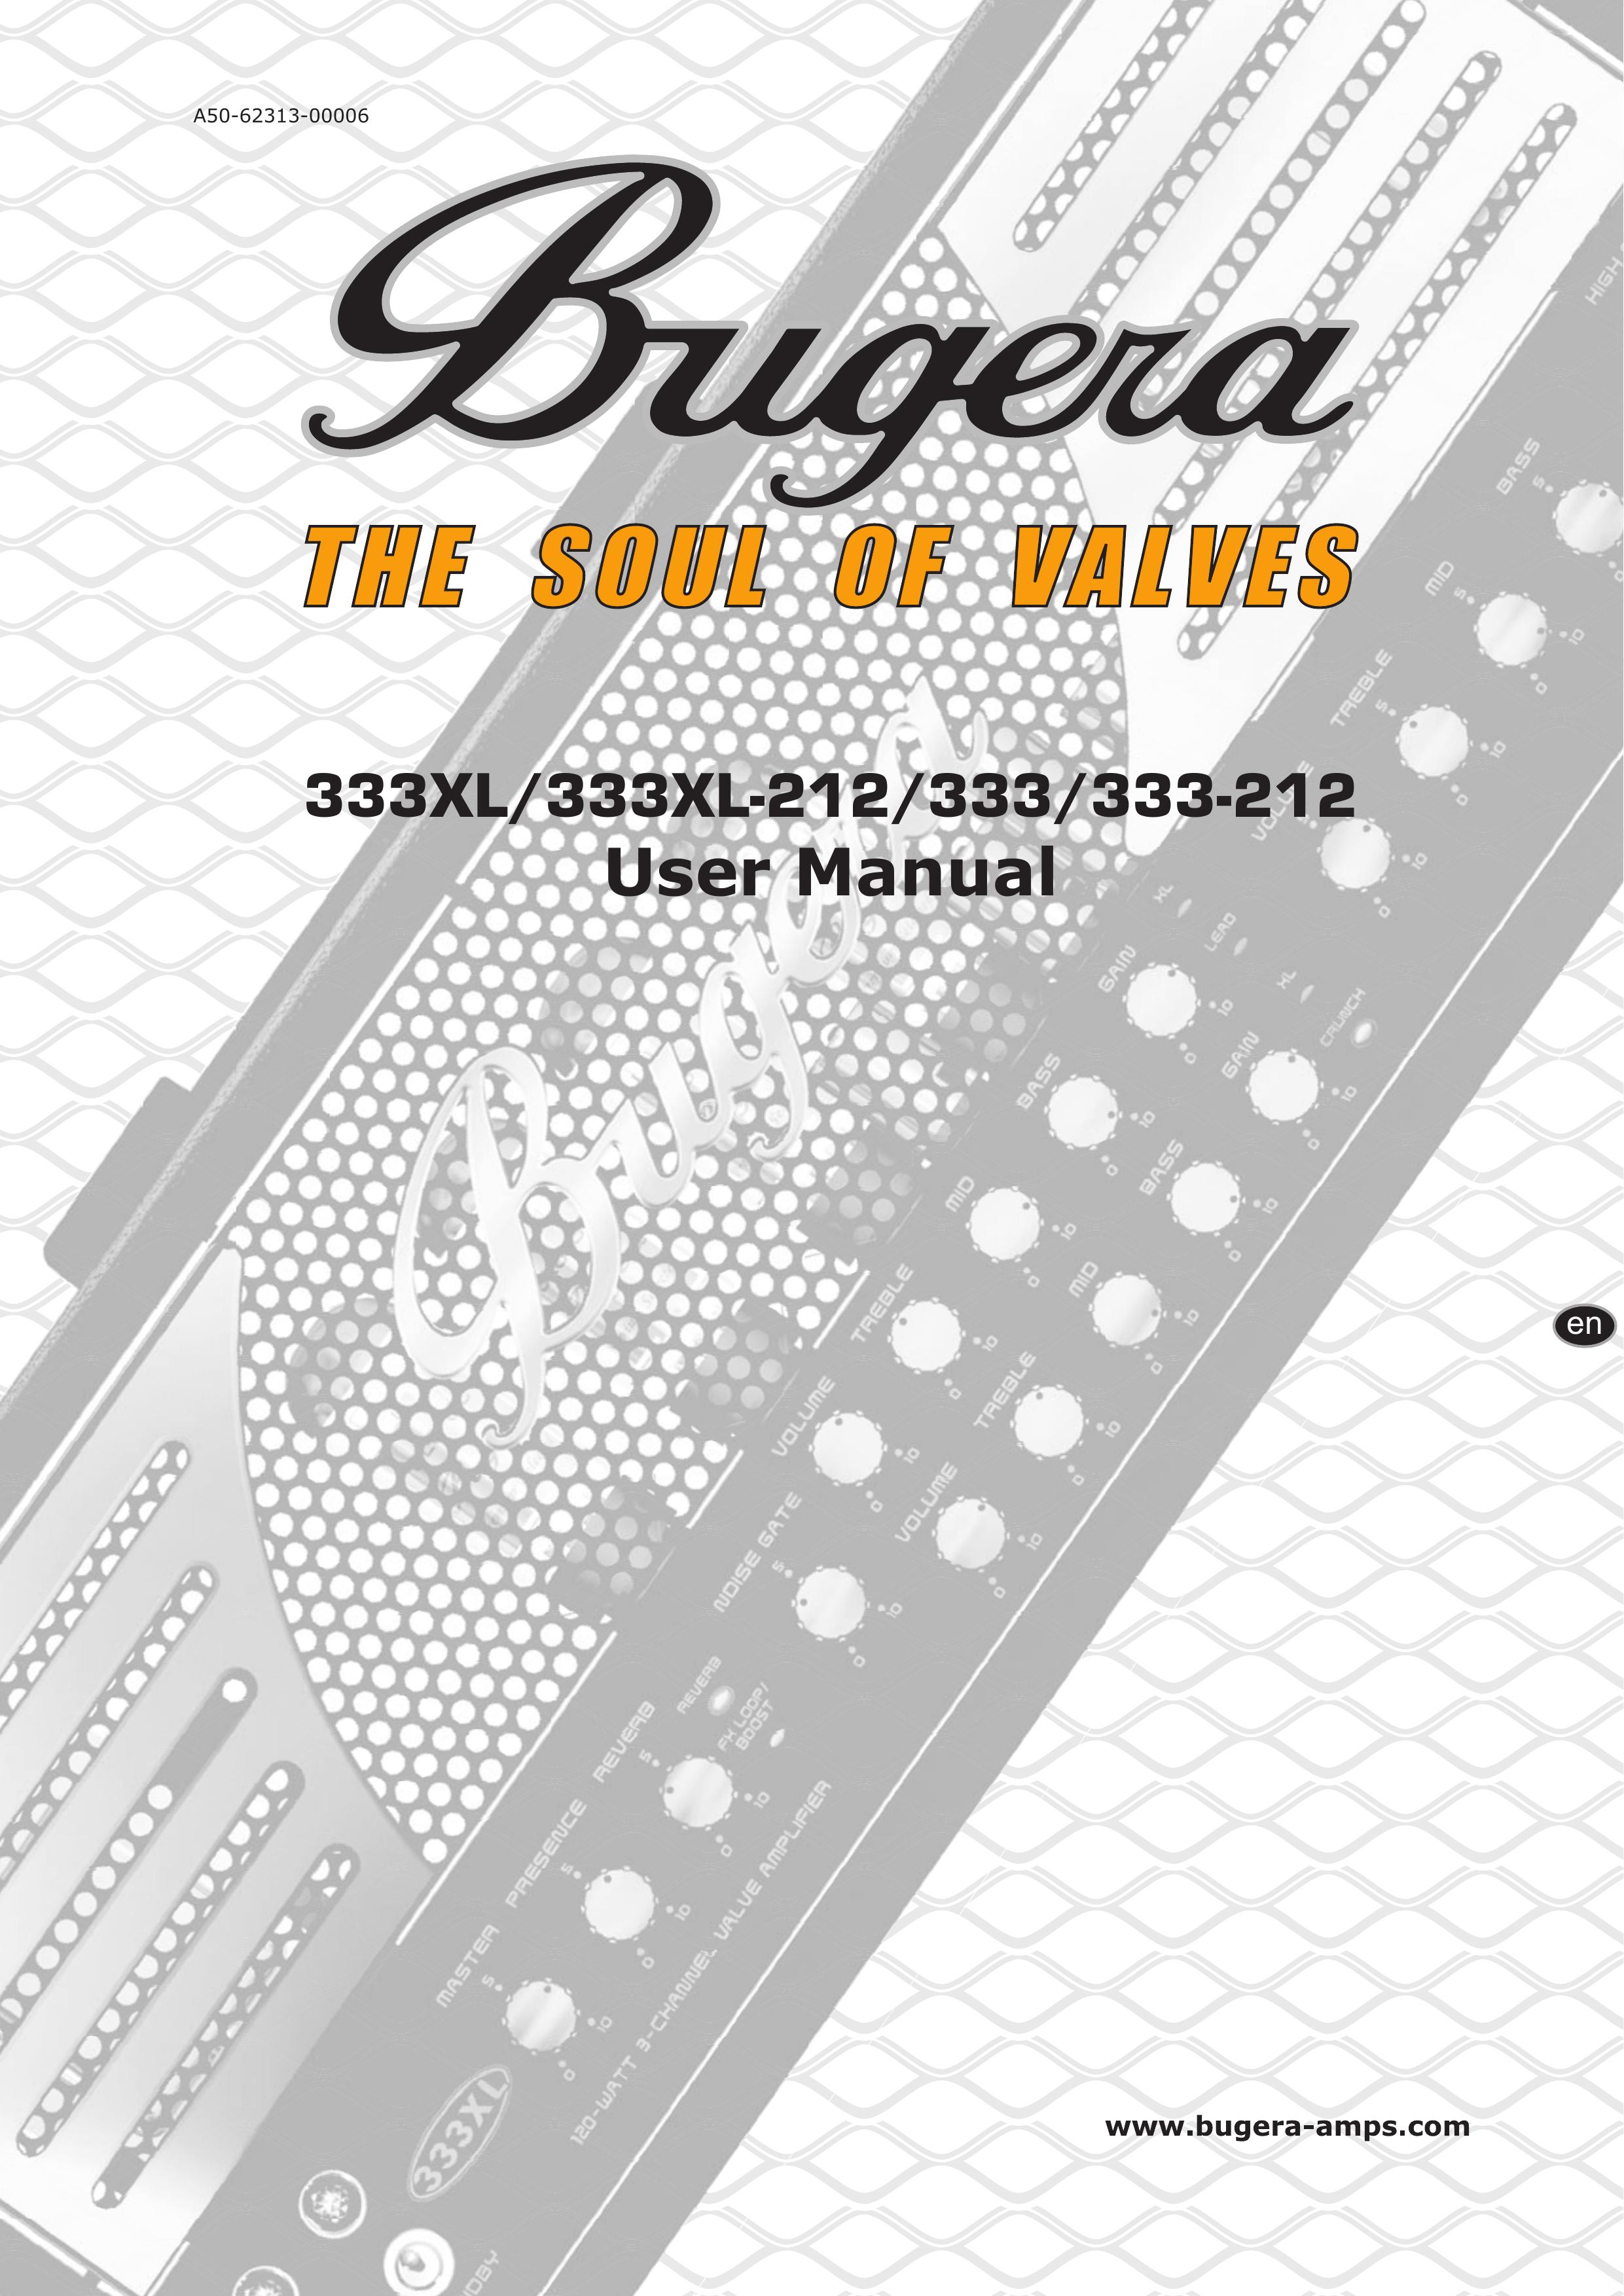 Behringer 333 Musical Instrument Amplifier User Manual